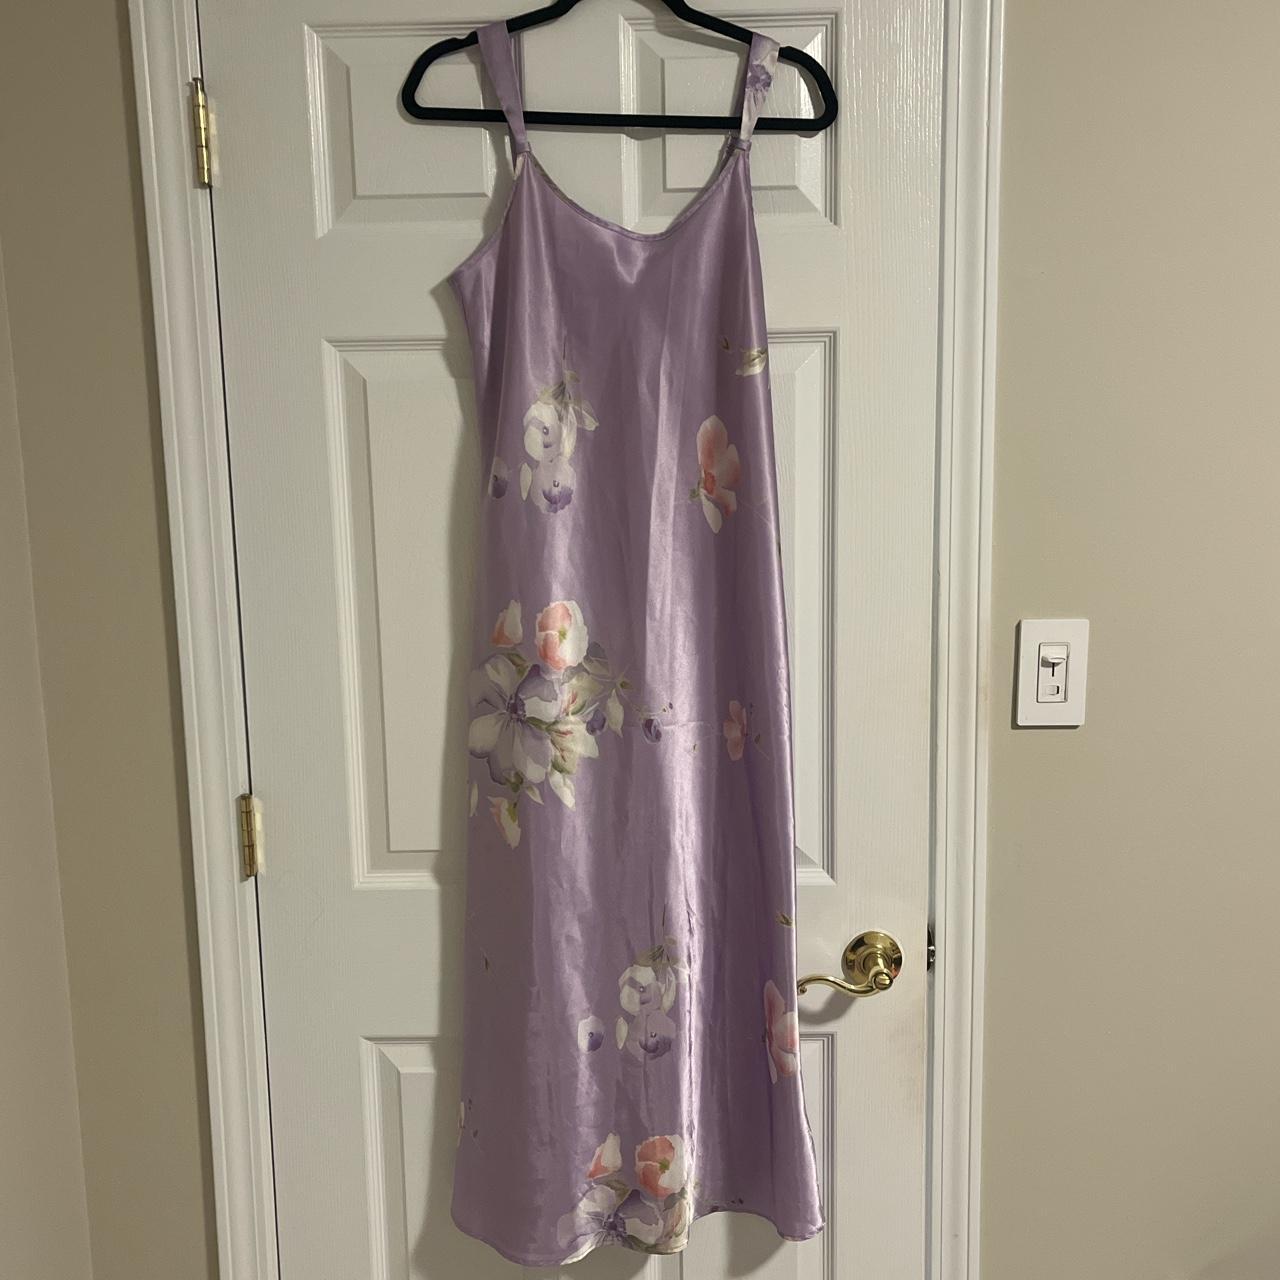 Lilac vintage slip dress • no size on tag, fits S/M - Depop